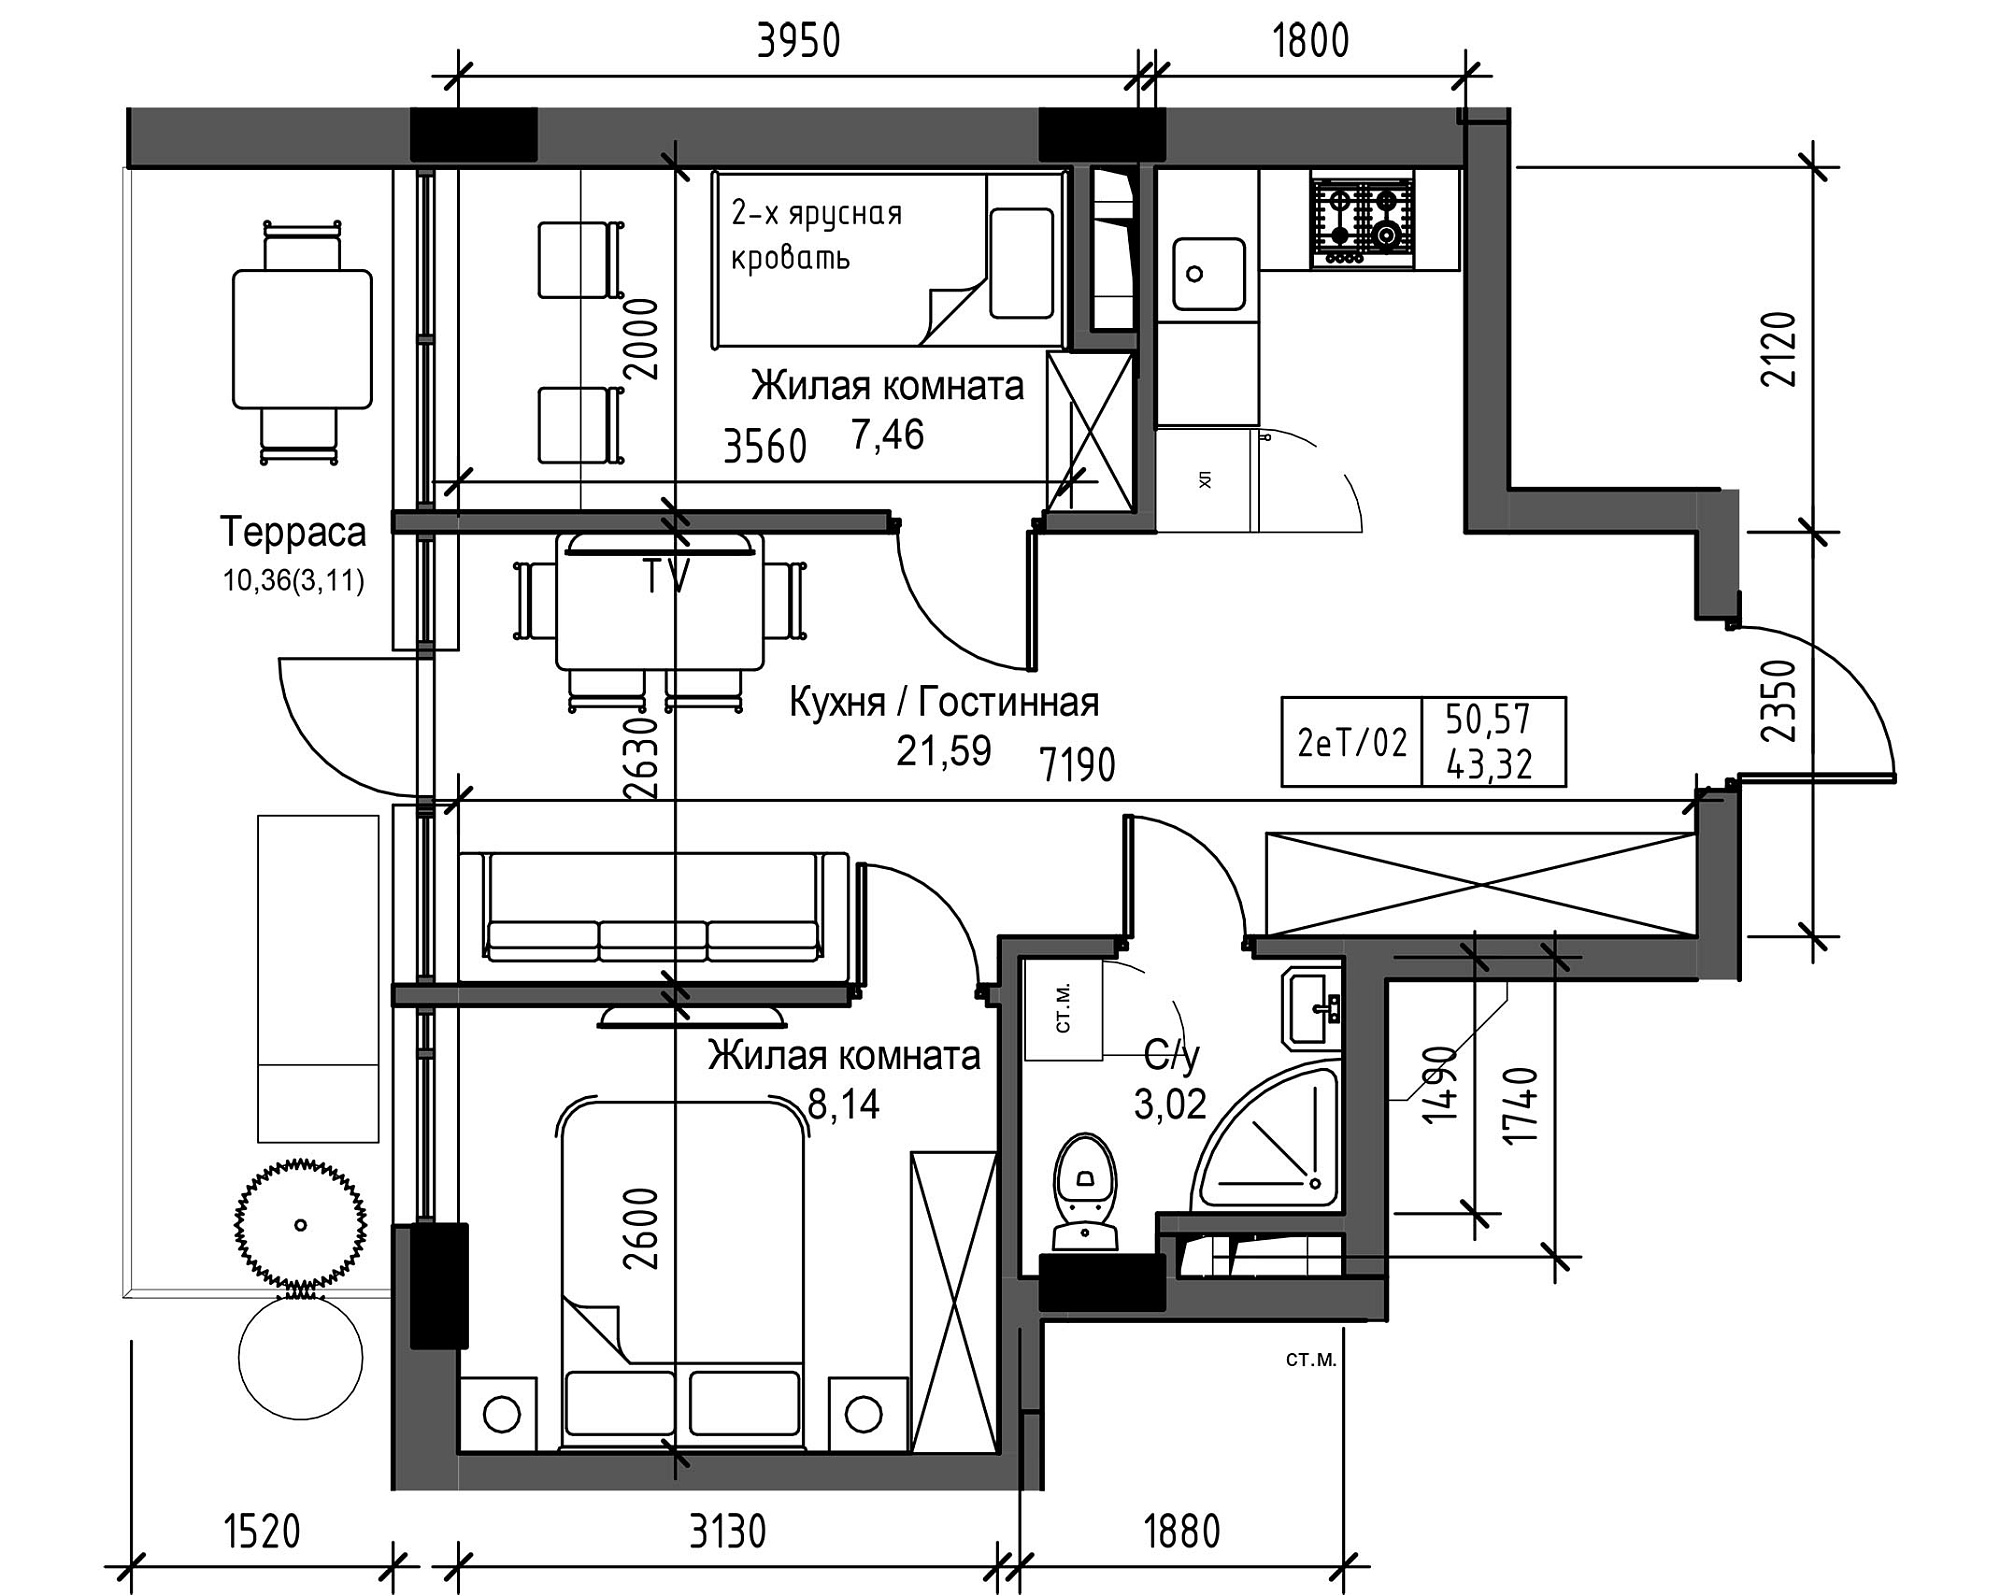 Планування 2-к квартира площею 43.32м2, UM-003-08/0086.